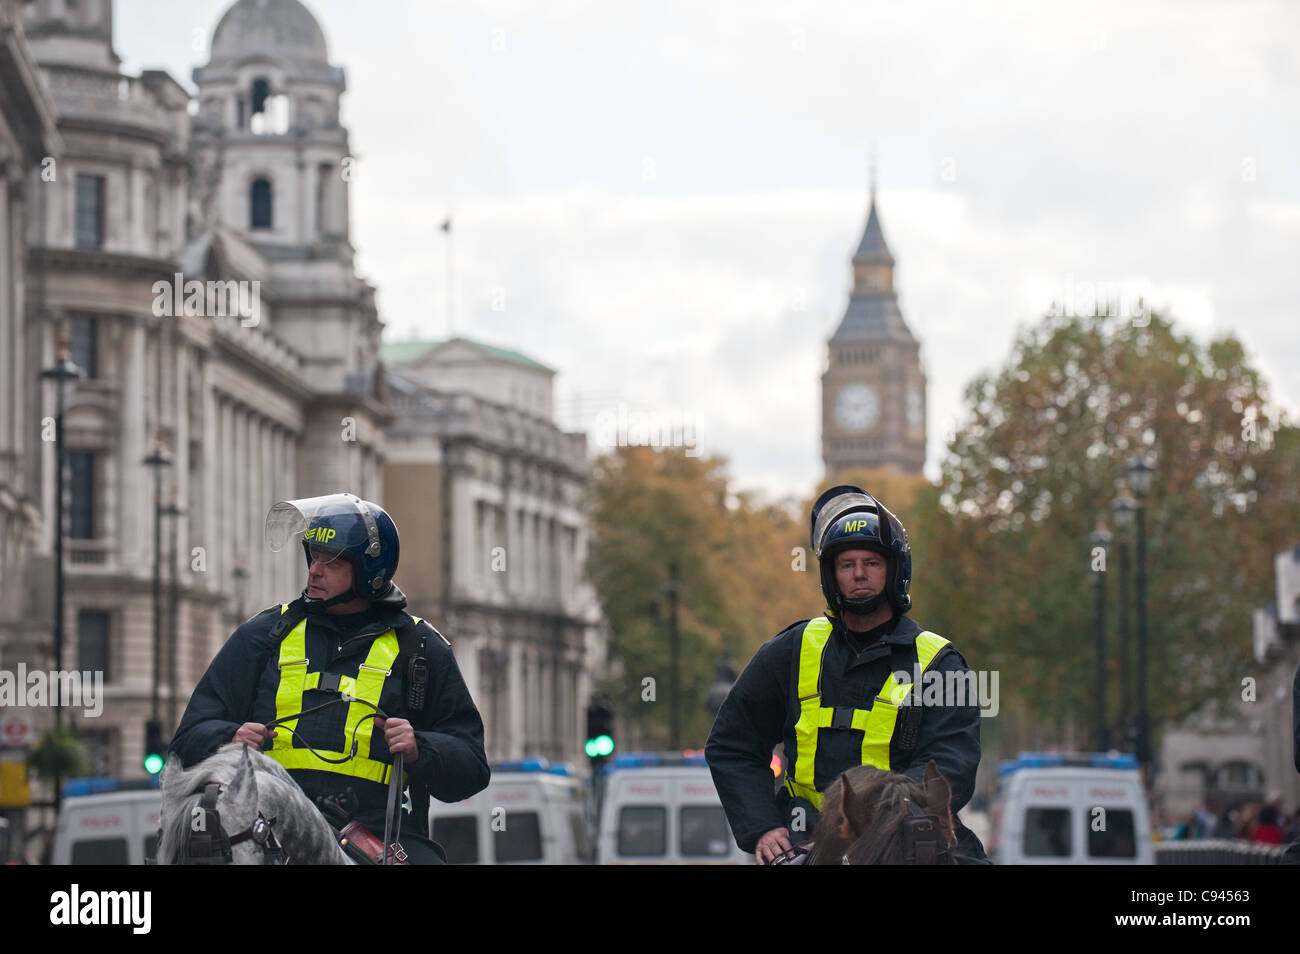 Metropolitan mounted police on duty in London Stock Photo